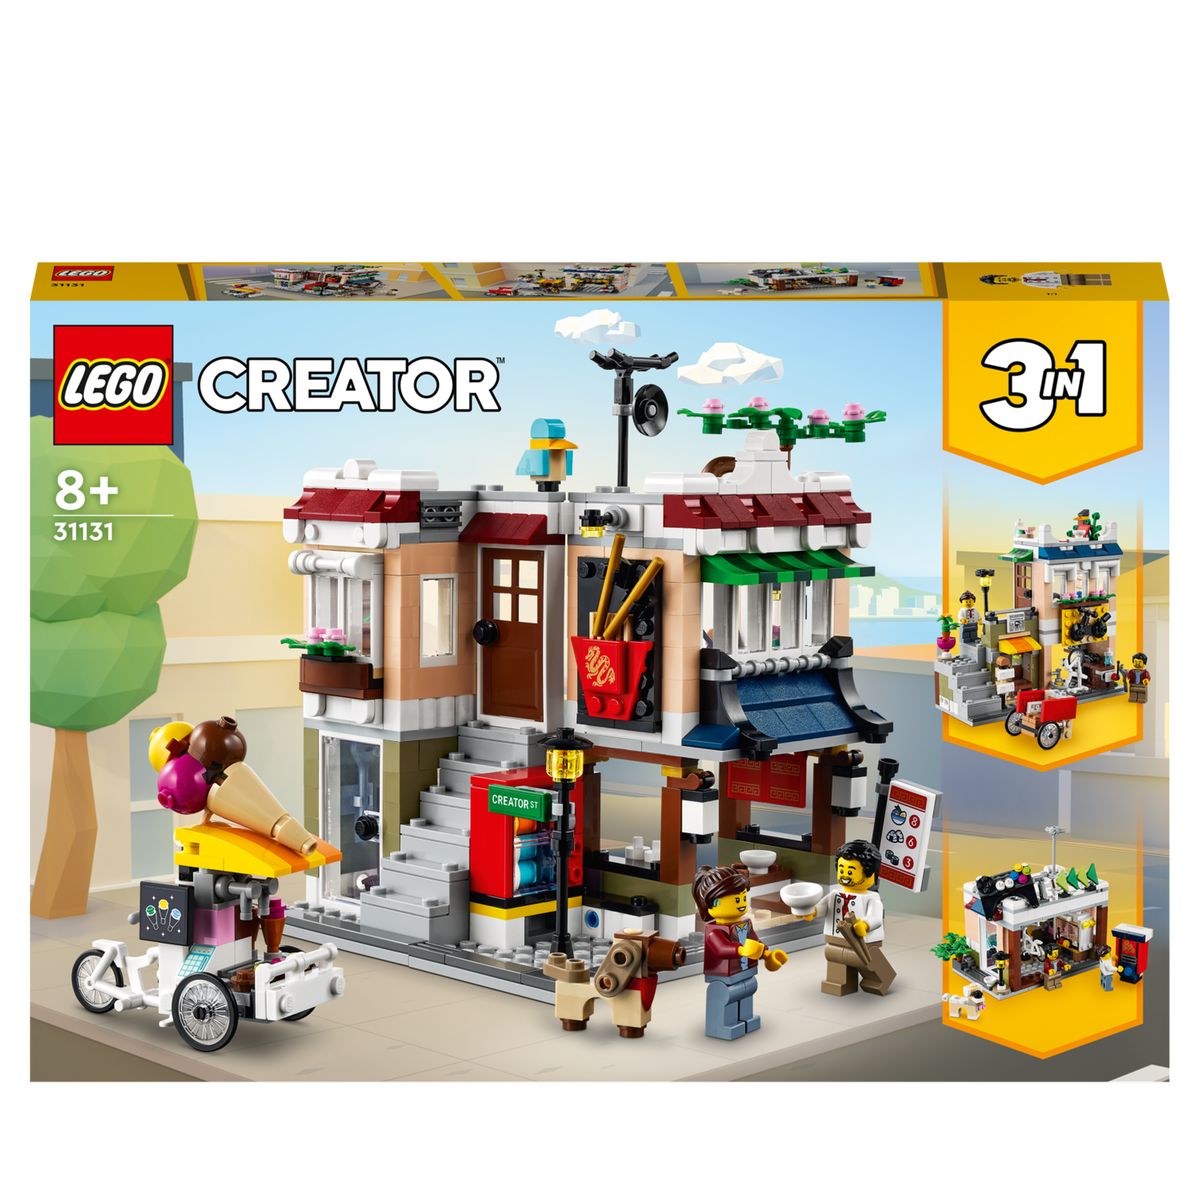 LEGO Tête de Rangement Fille L - Boîte de rangement - Garantie 3